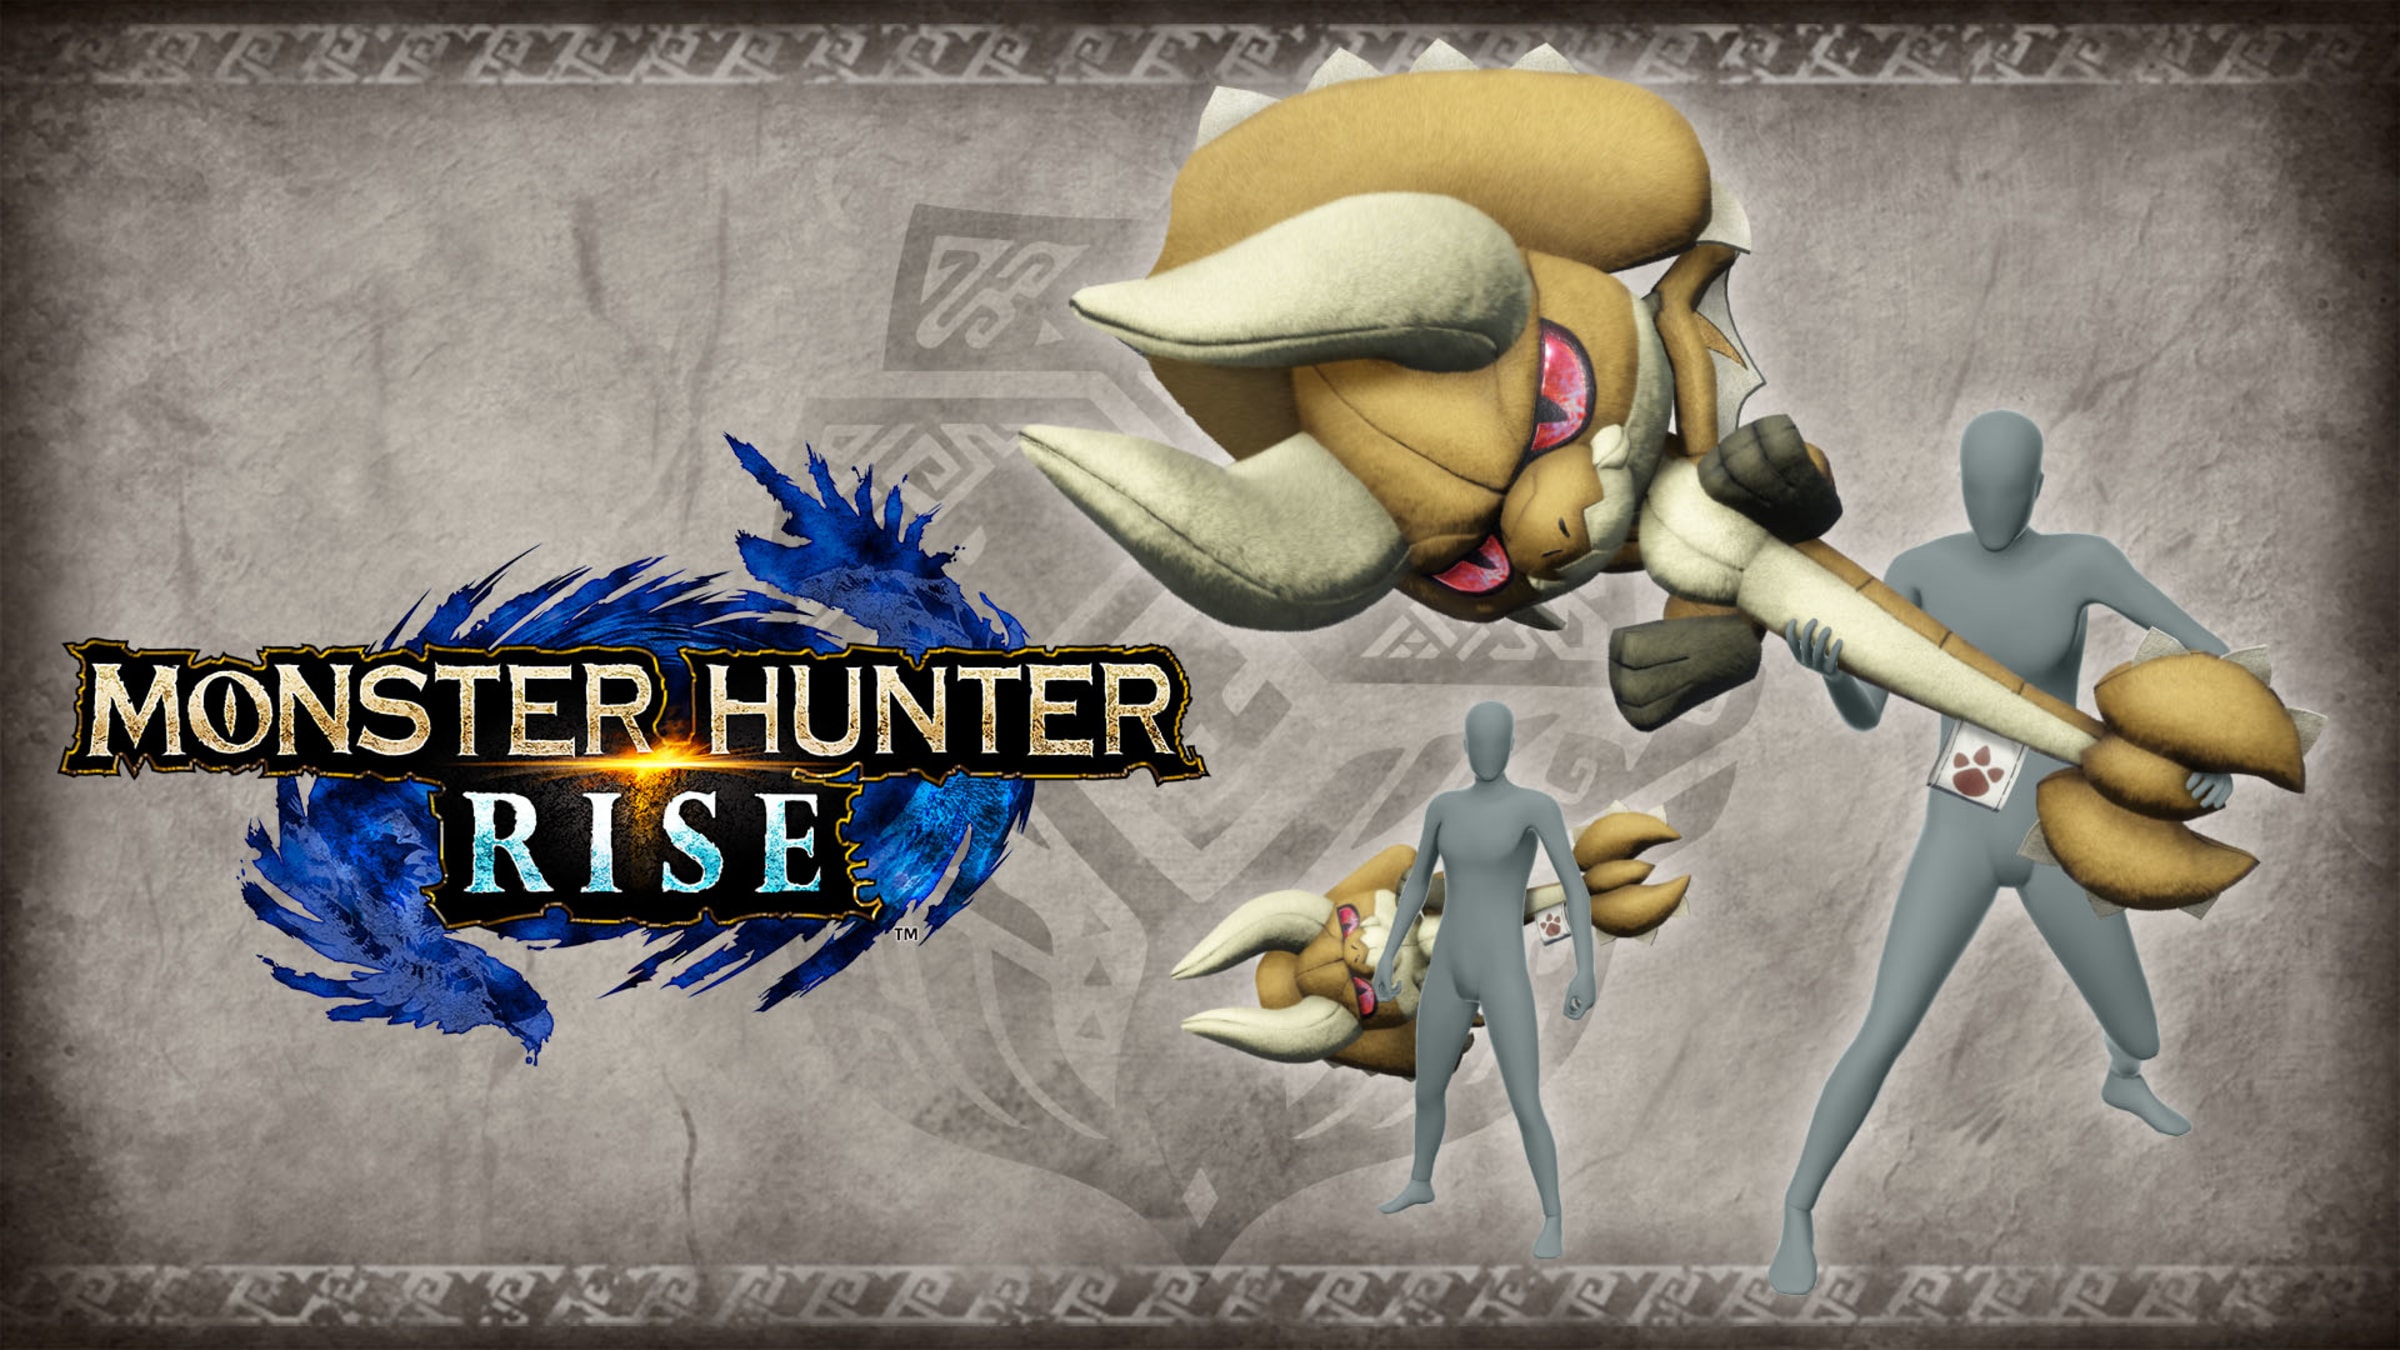 Monster Hunter Rise - Stuffed Diablos Hunter layered weapon